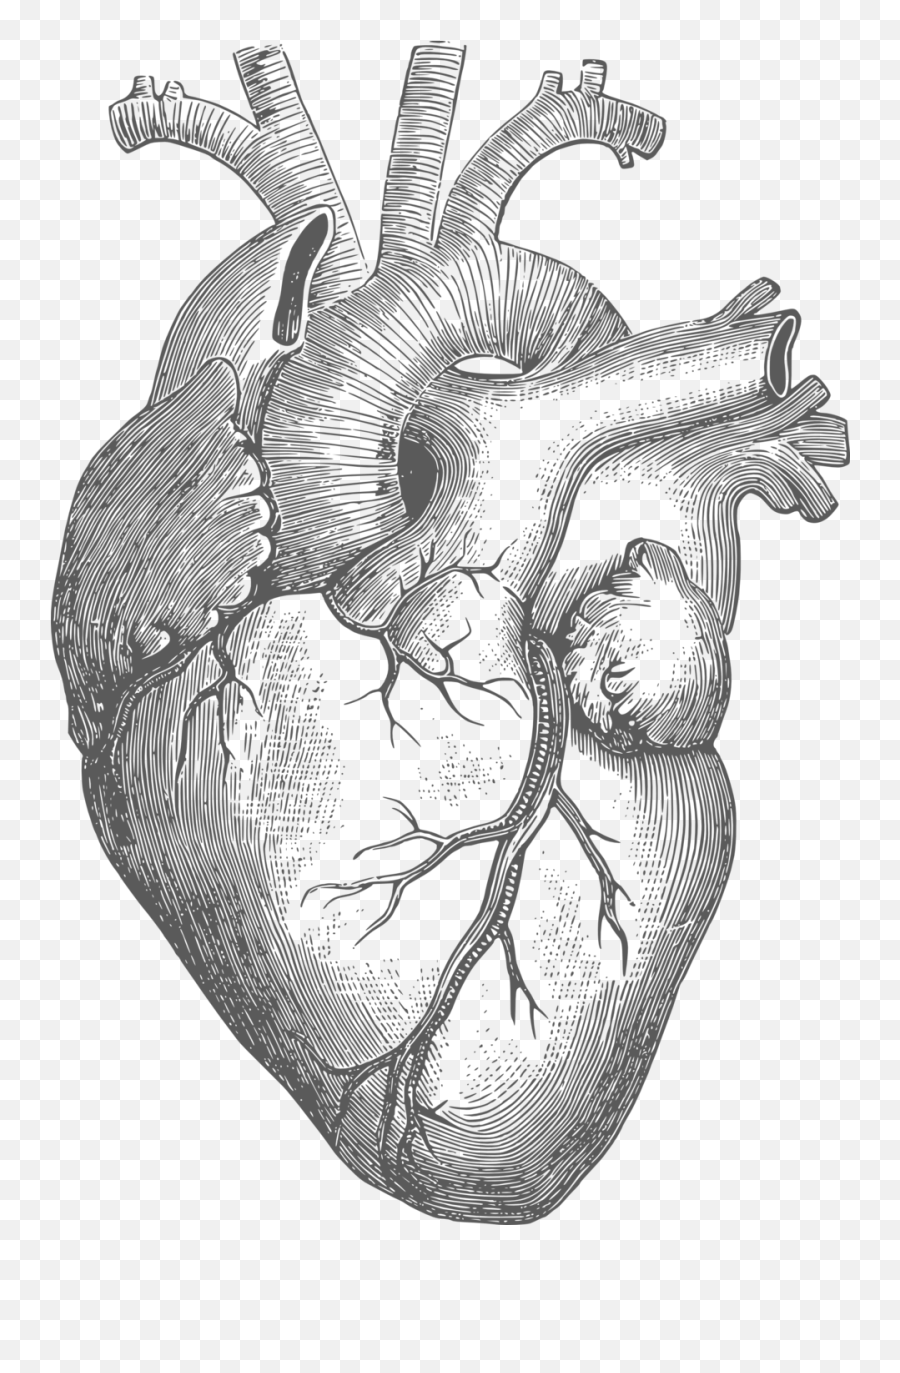 The Heart That Breaks Open - Real Drawing Human Heart Emoji,Line Drawing Heart Emotions